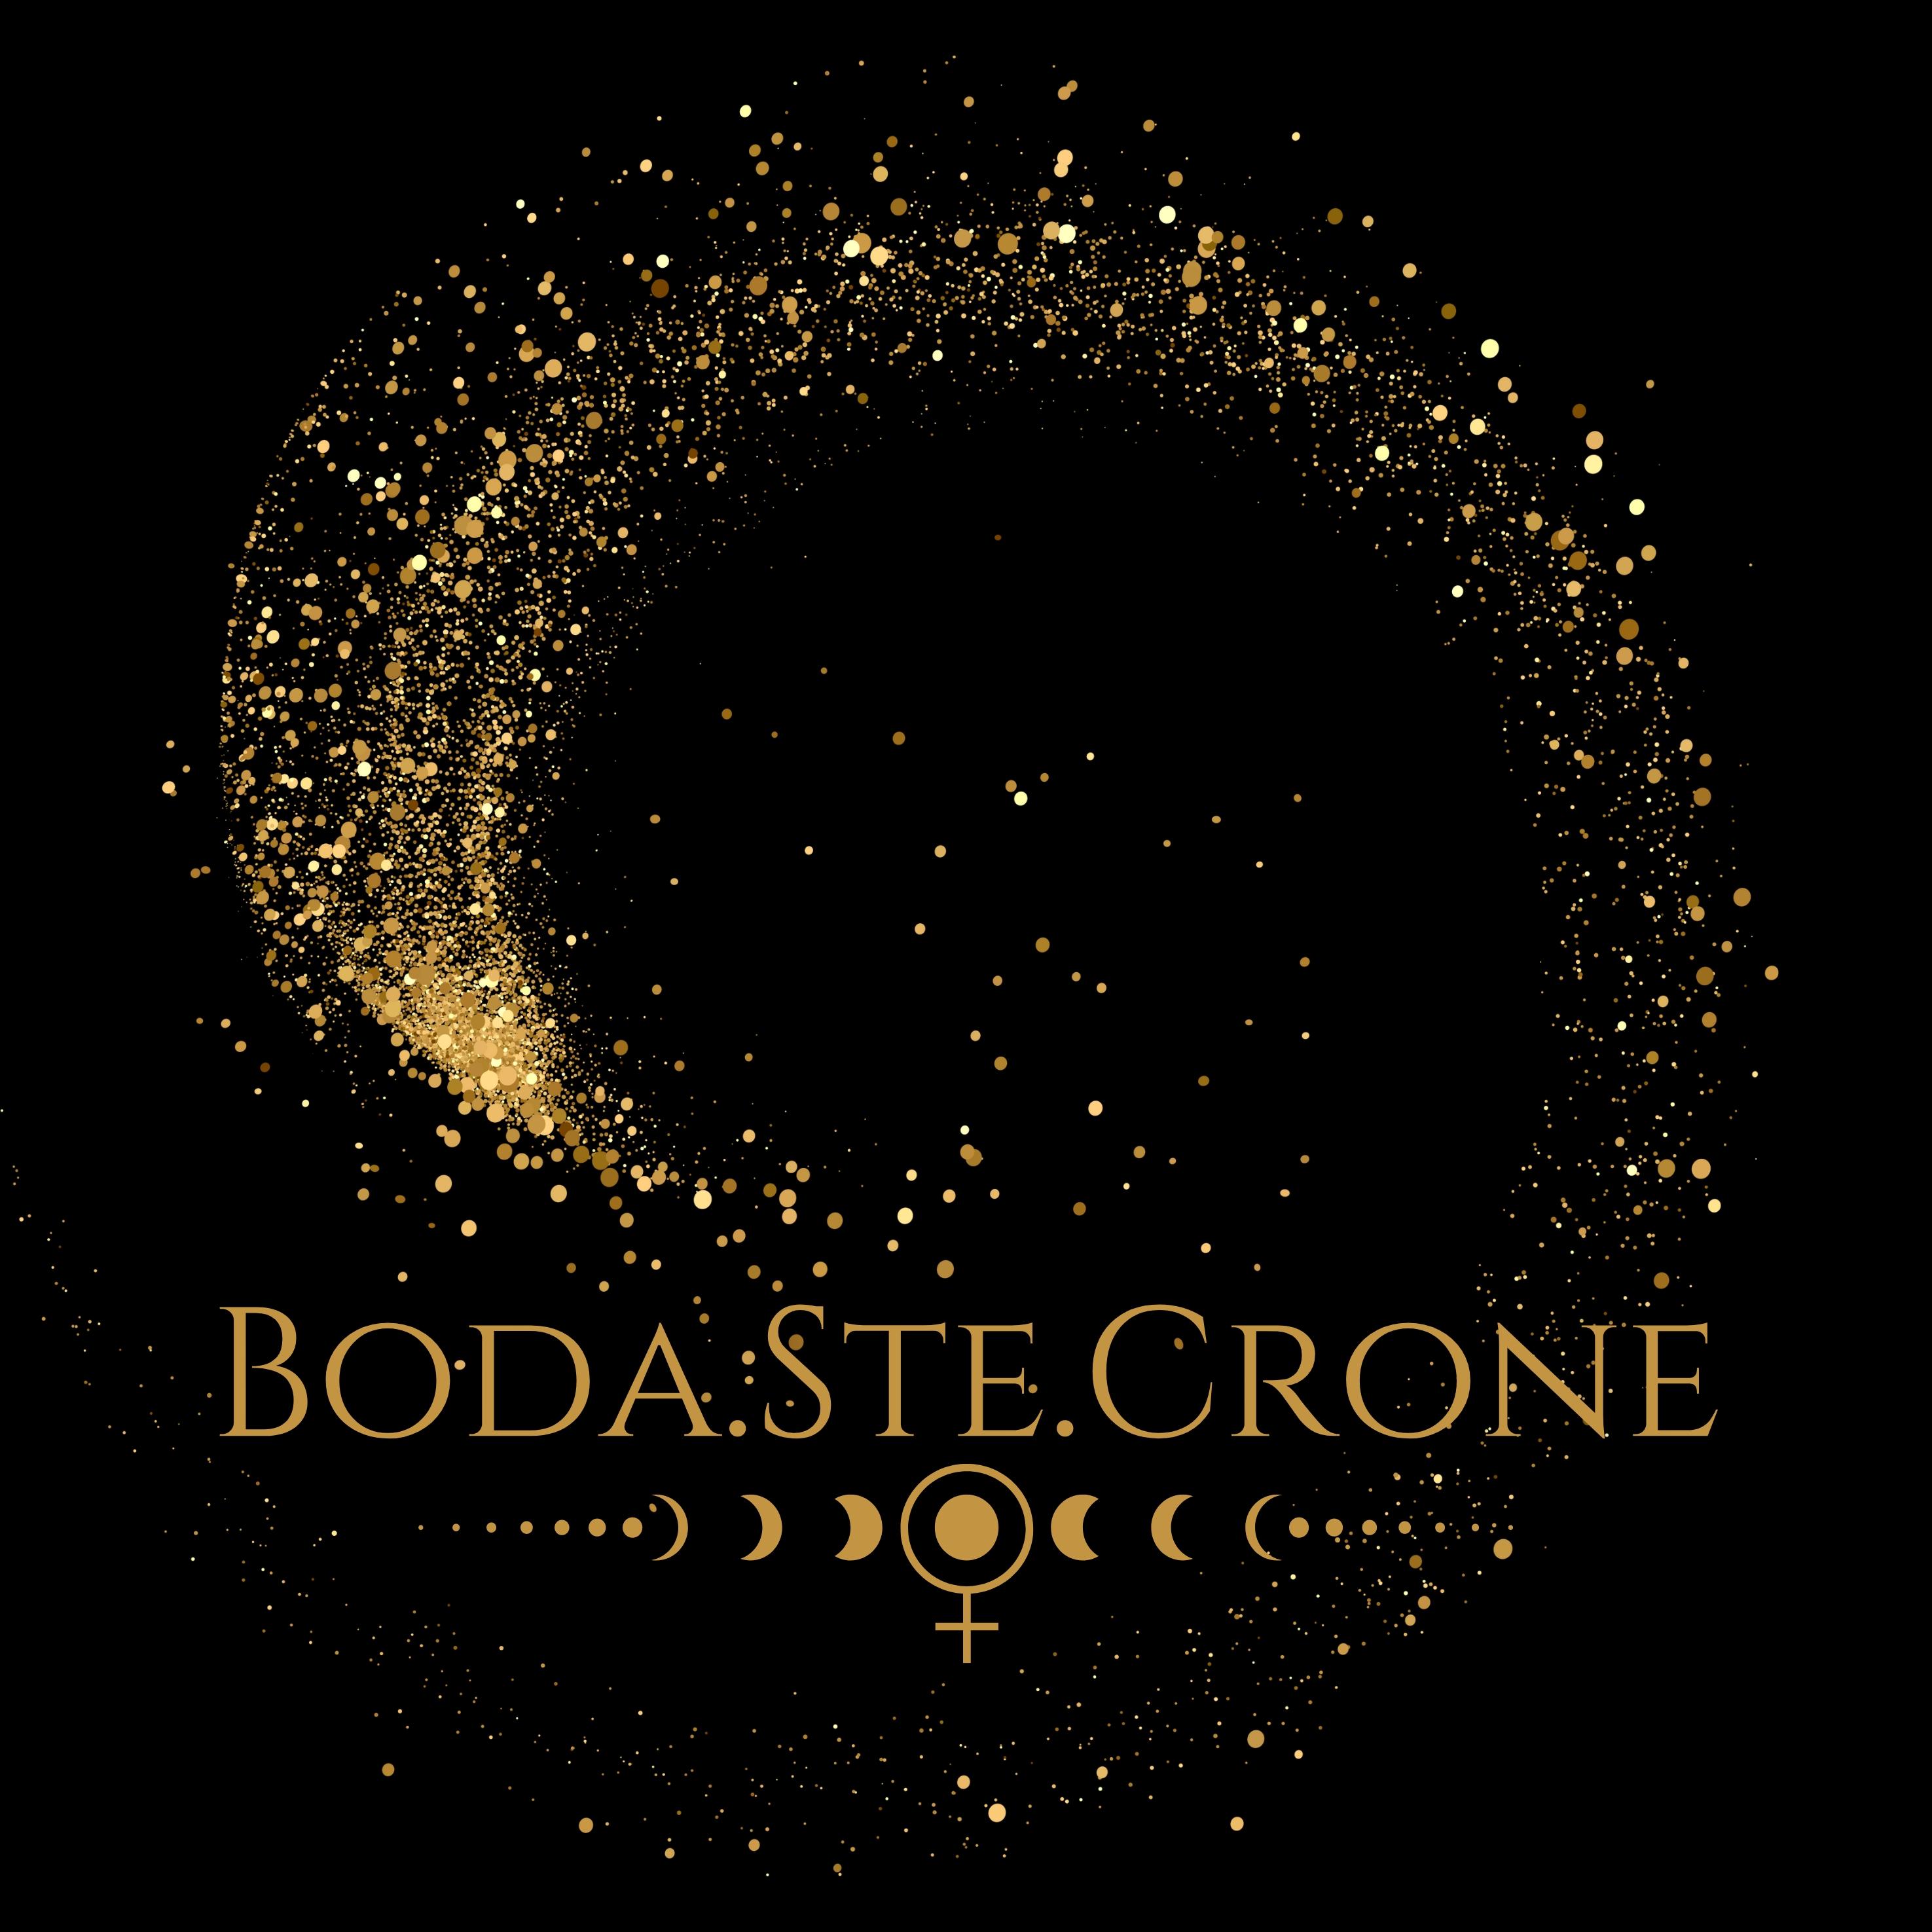 Boda Ste.Crone's images